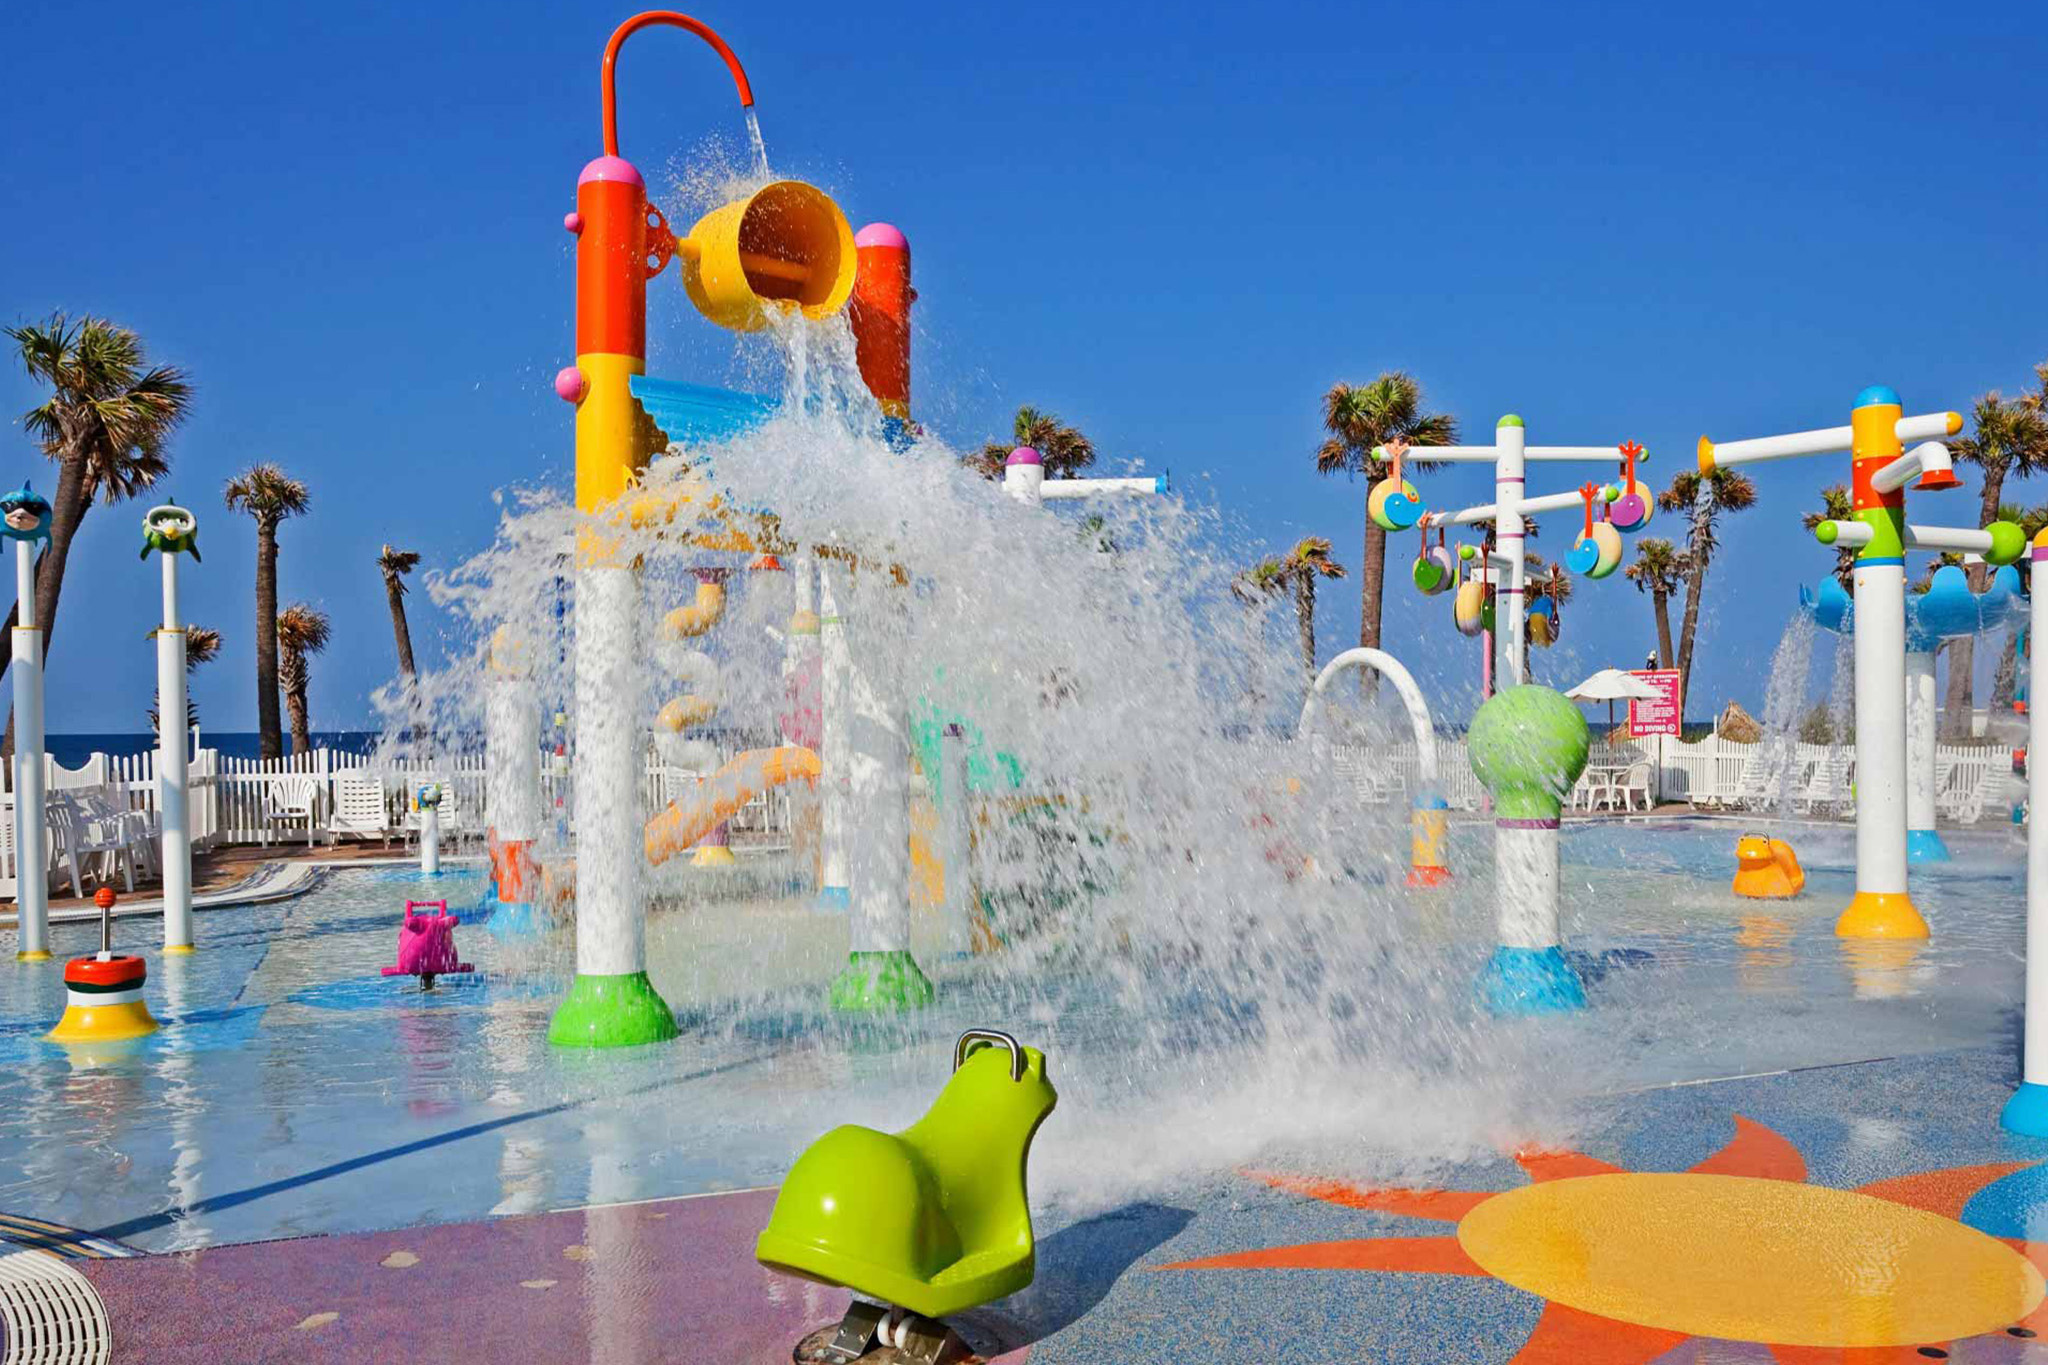 Kids' splash pad and water park